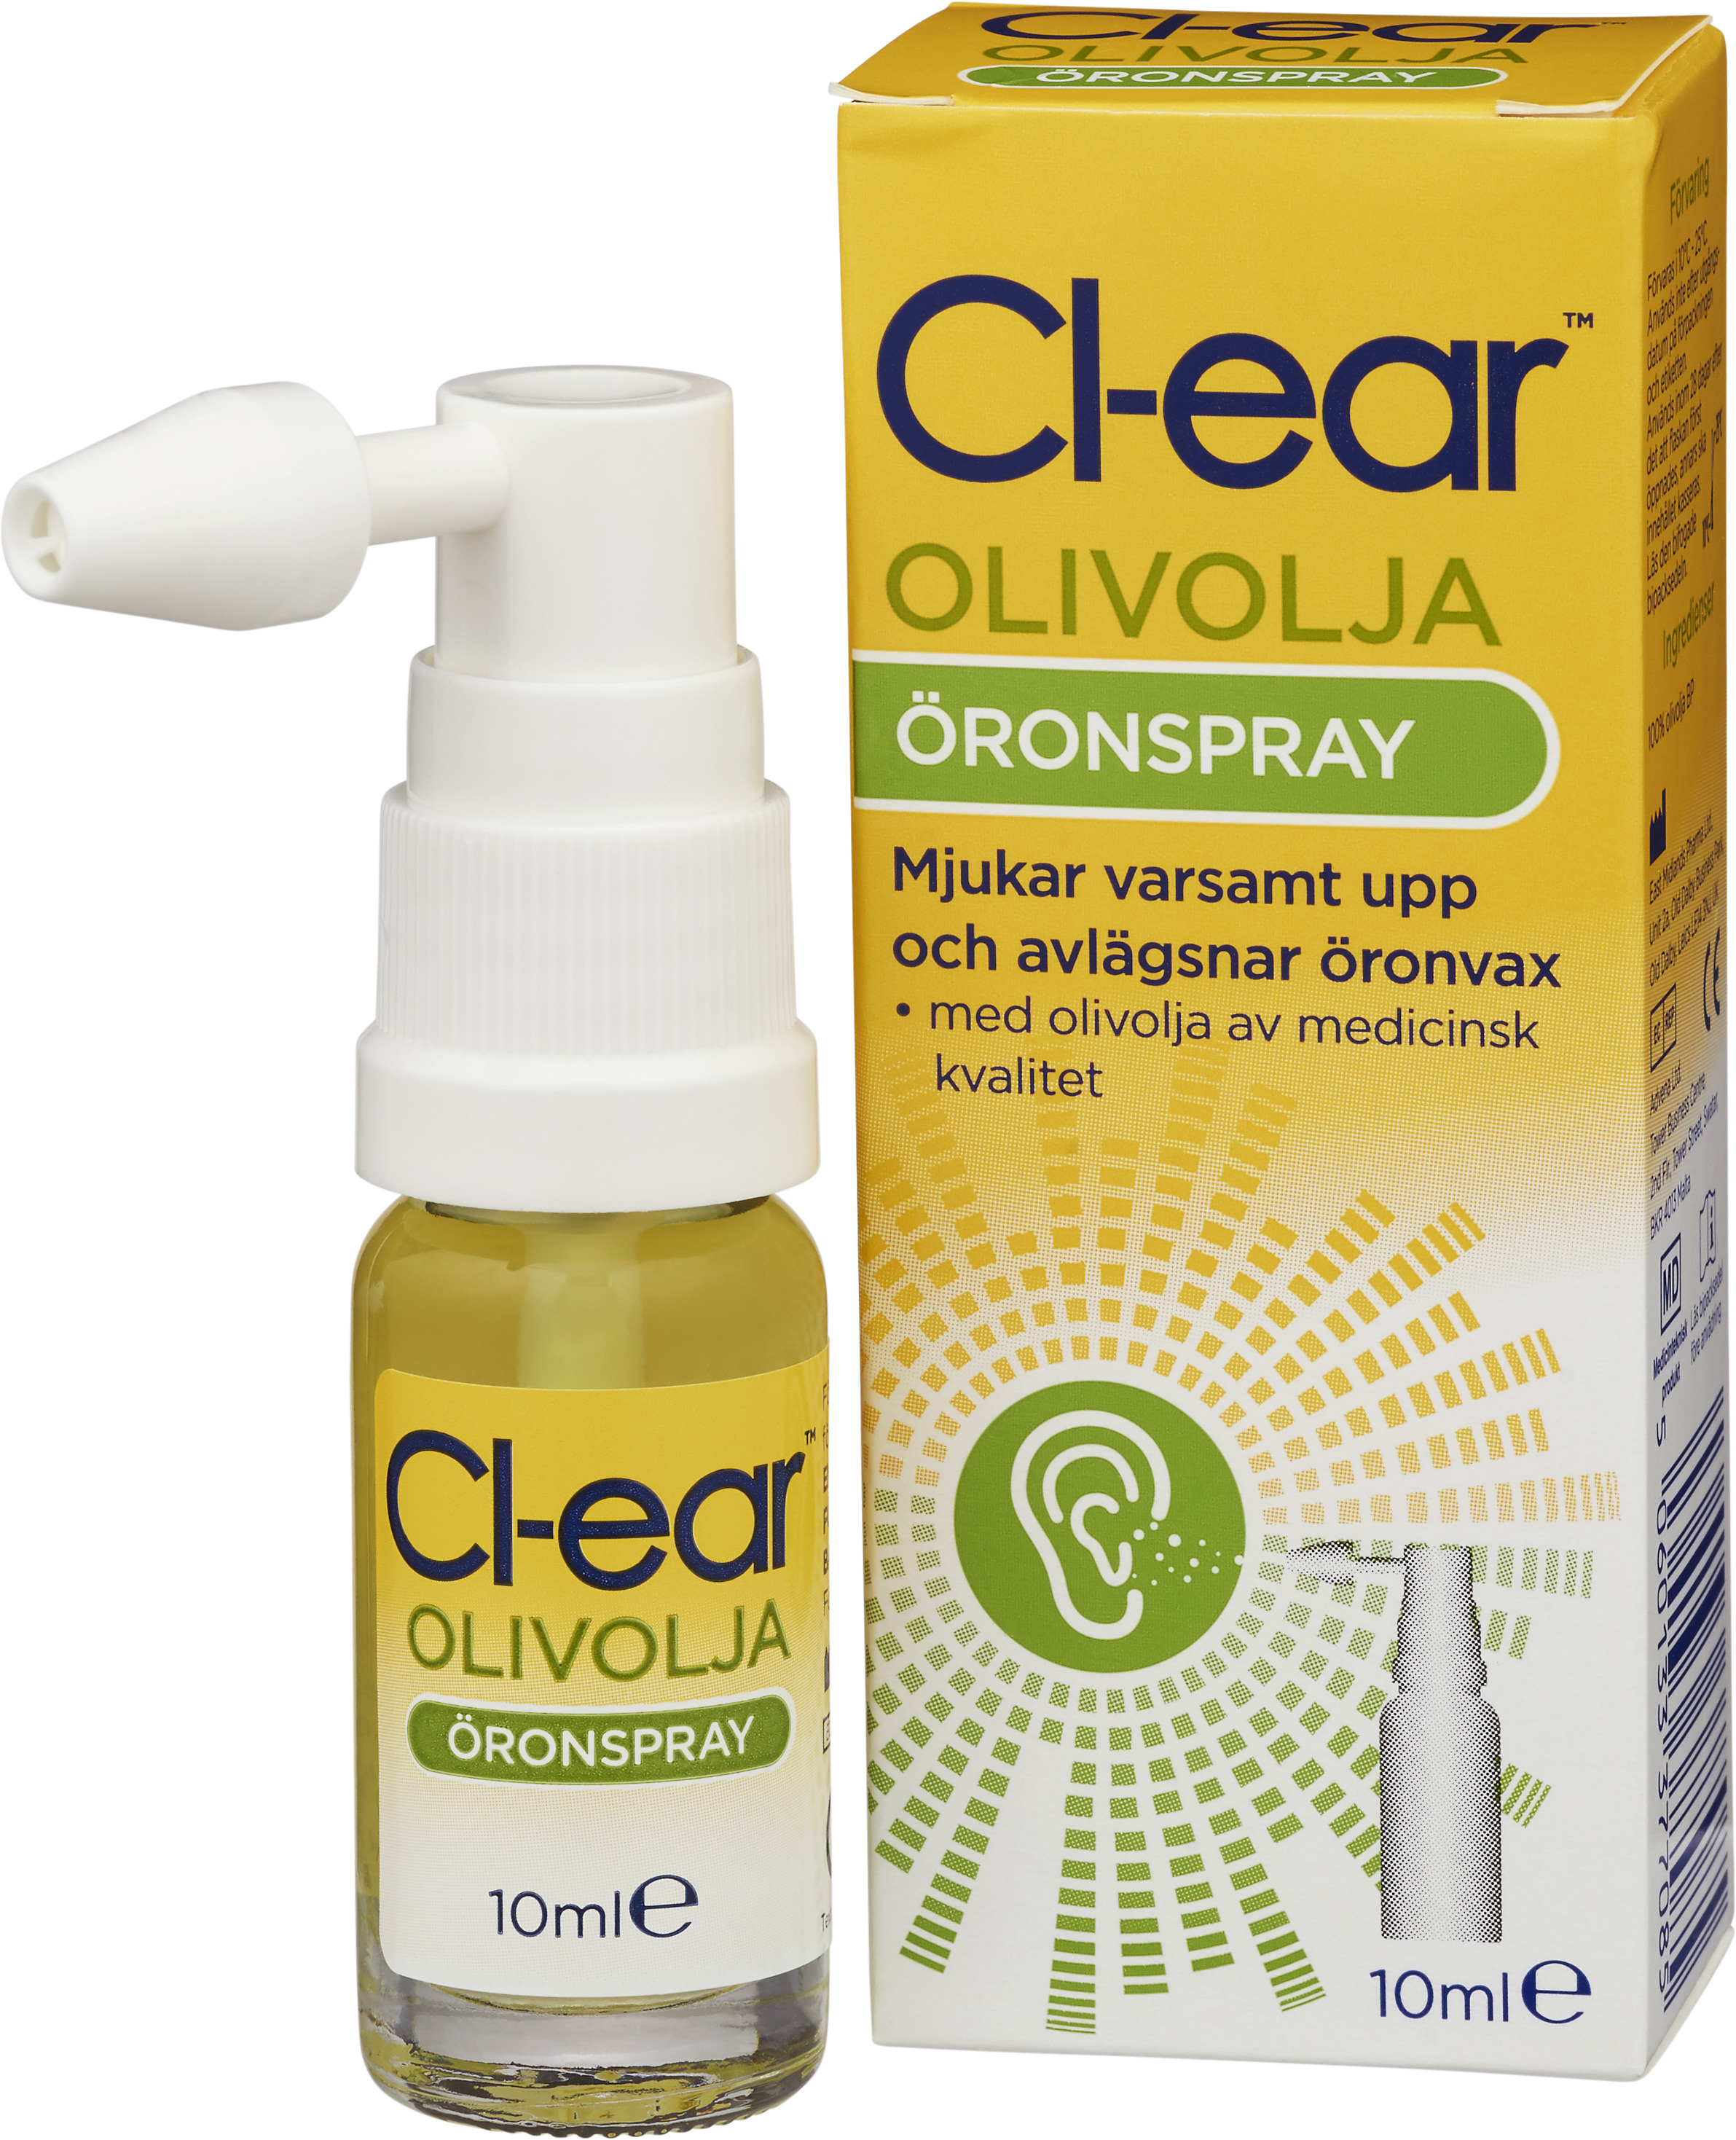 Cl-ear Olivolja Öron spray 10 ml